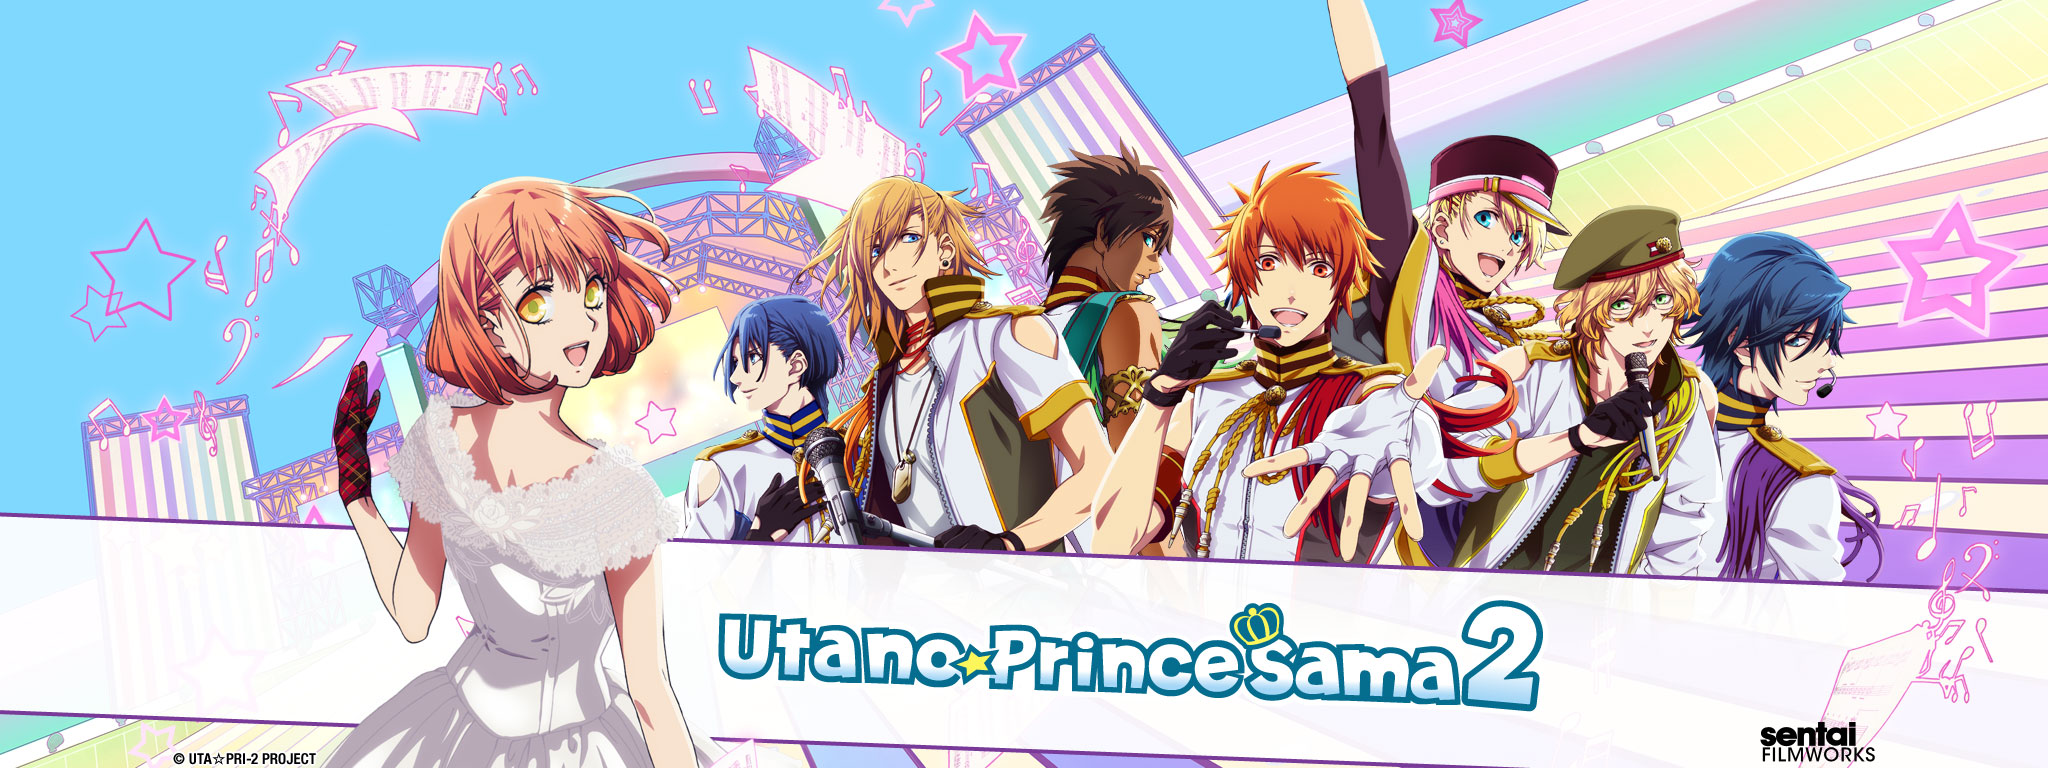 Title Art for Utano Prince Sama 2000%